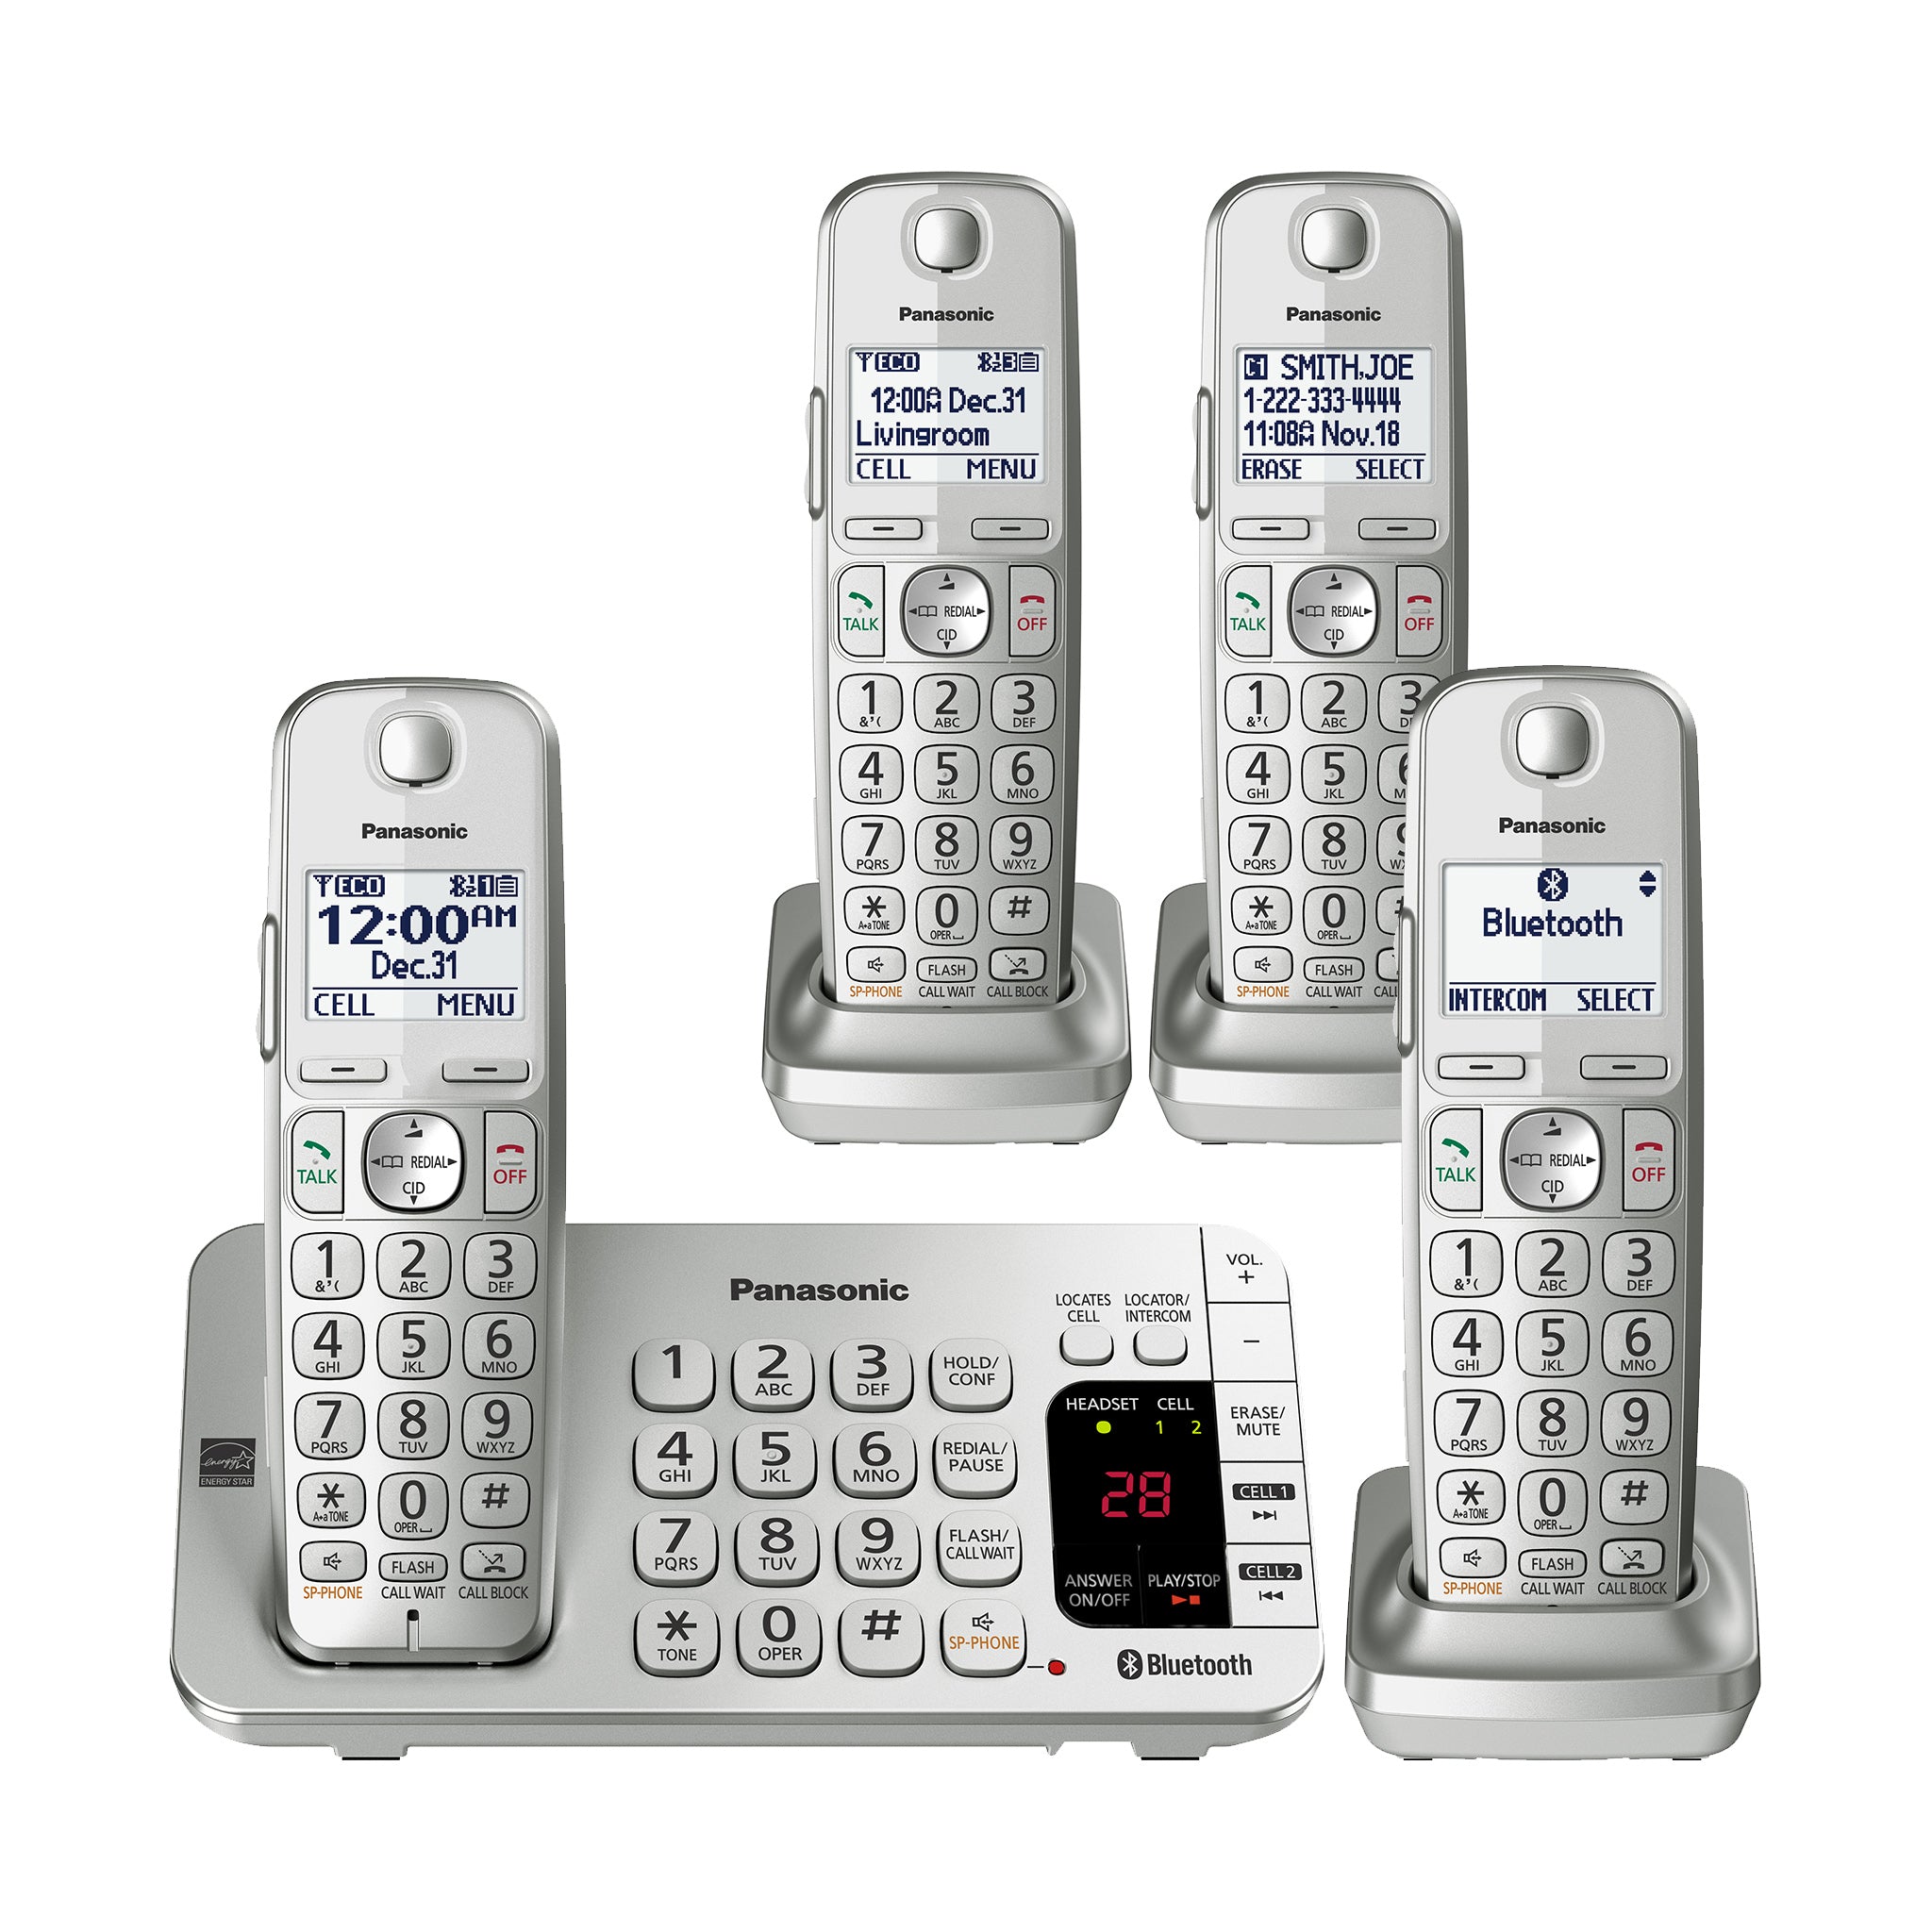 Panasonic Kx-tge474s Link2Cell Bluetooth Cordless Phone System (4-handset